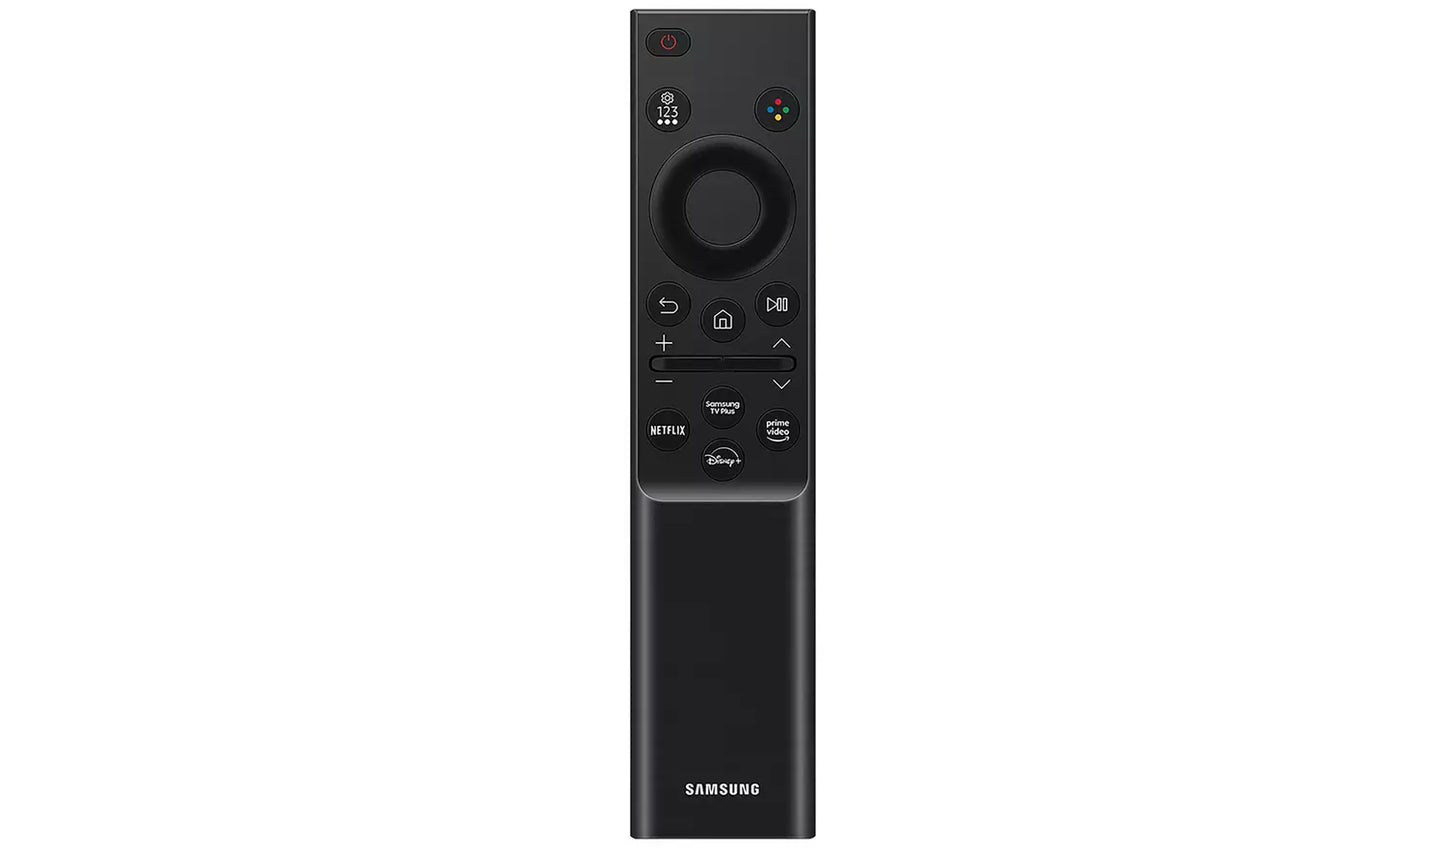 Samsung 65 Inch UE65CU7100KXXU Smart 4K UHD HDR LED TV